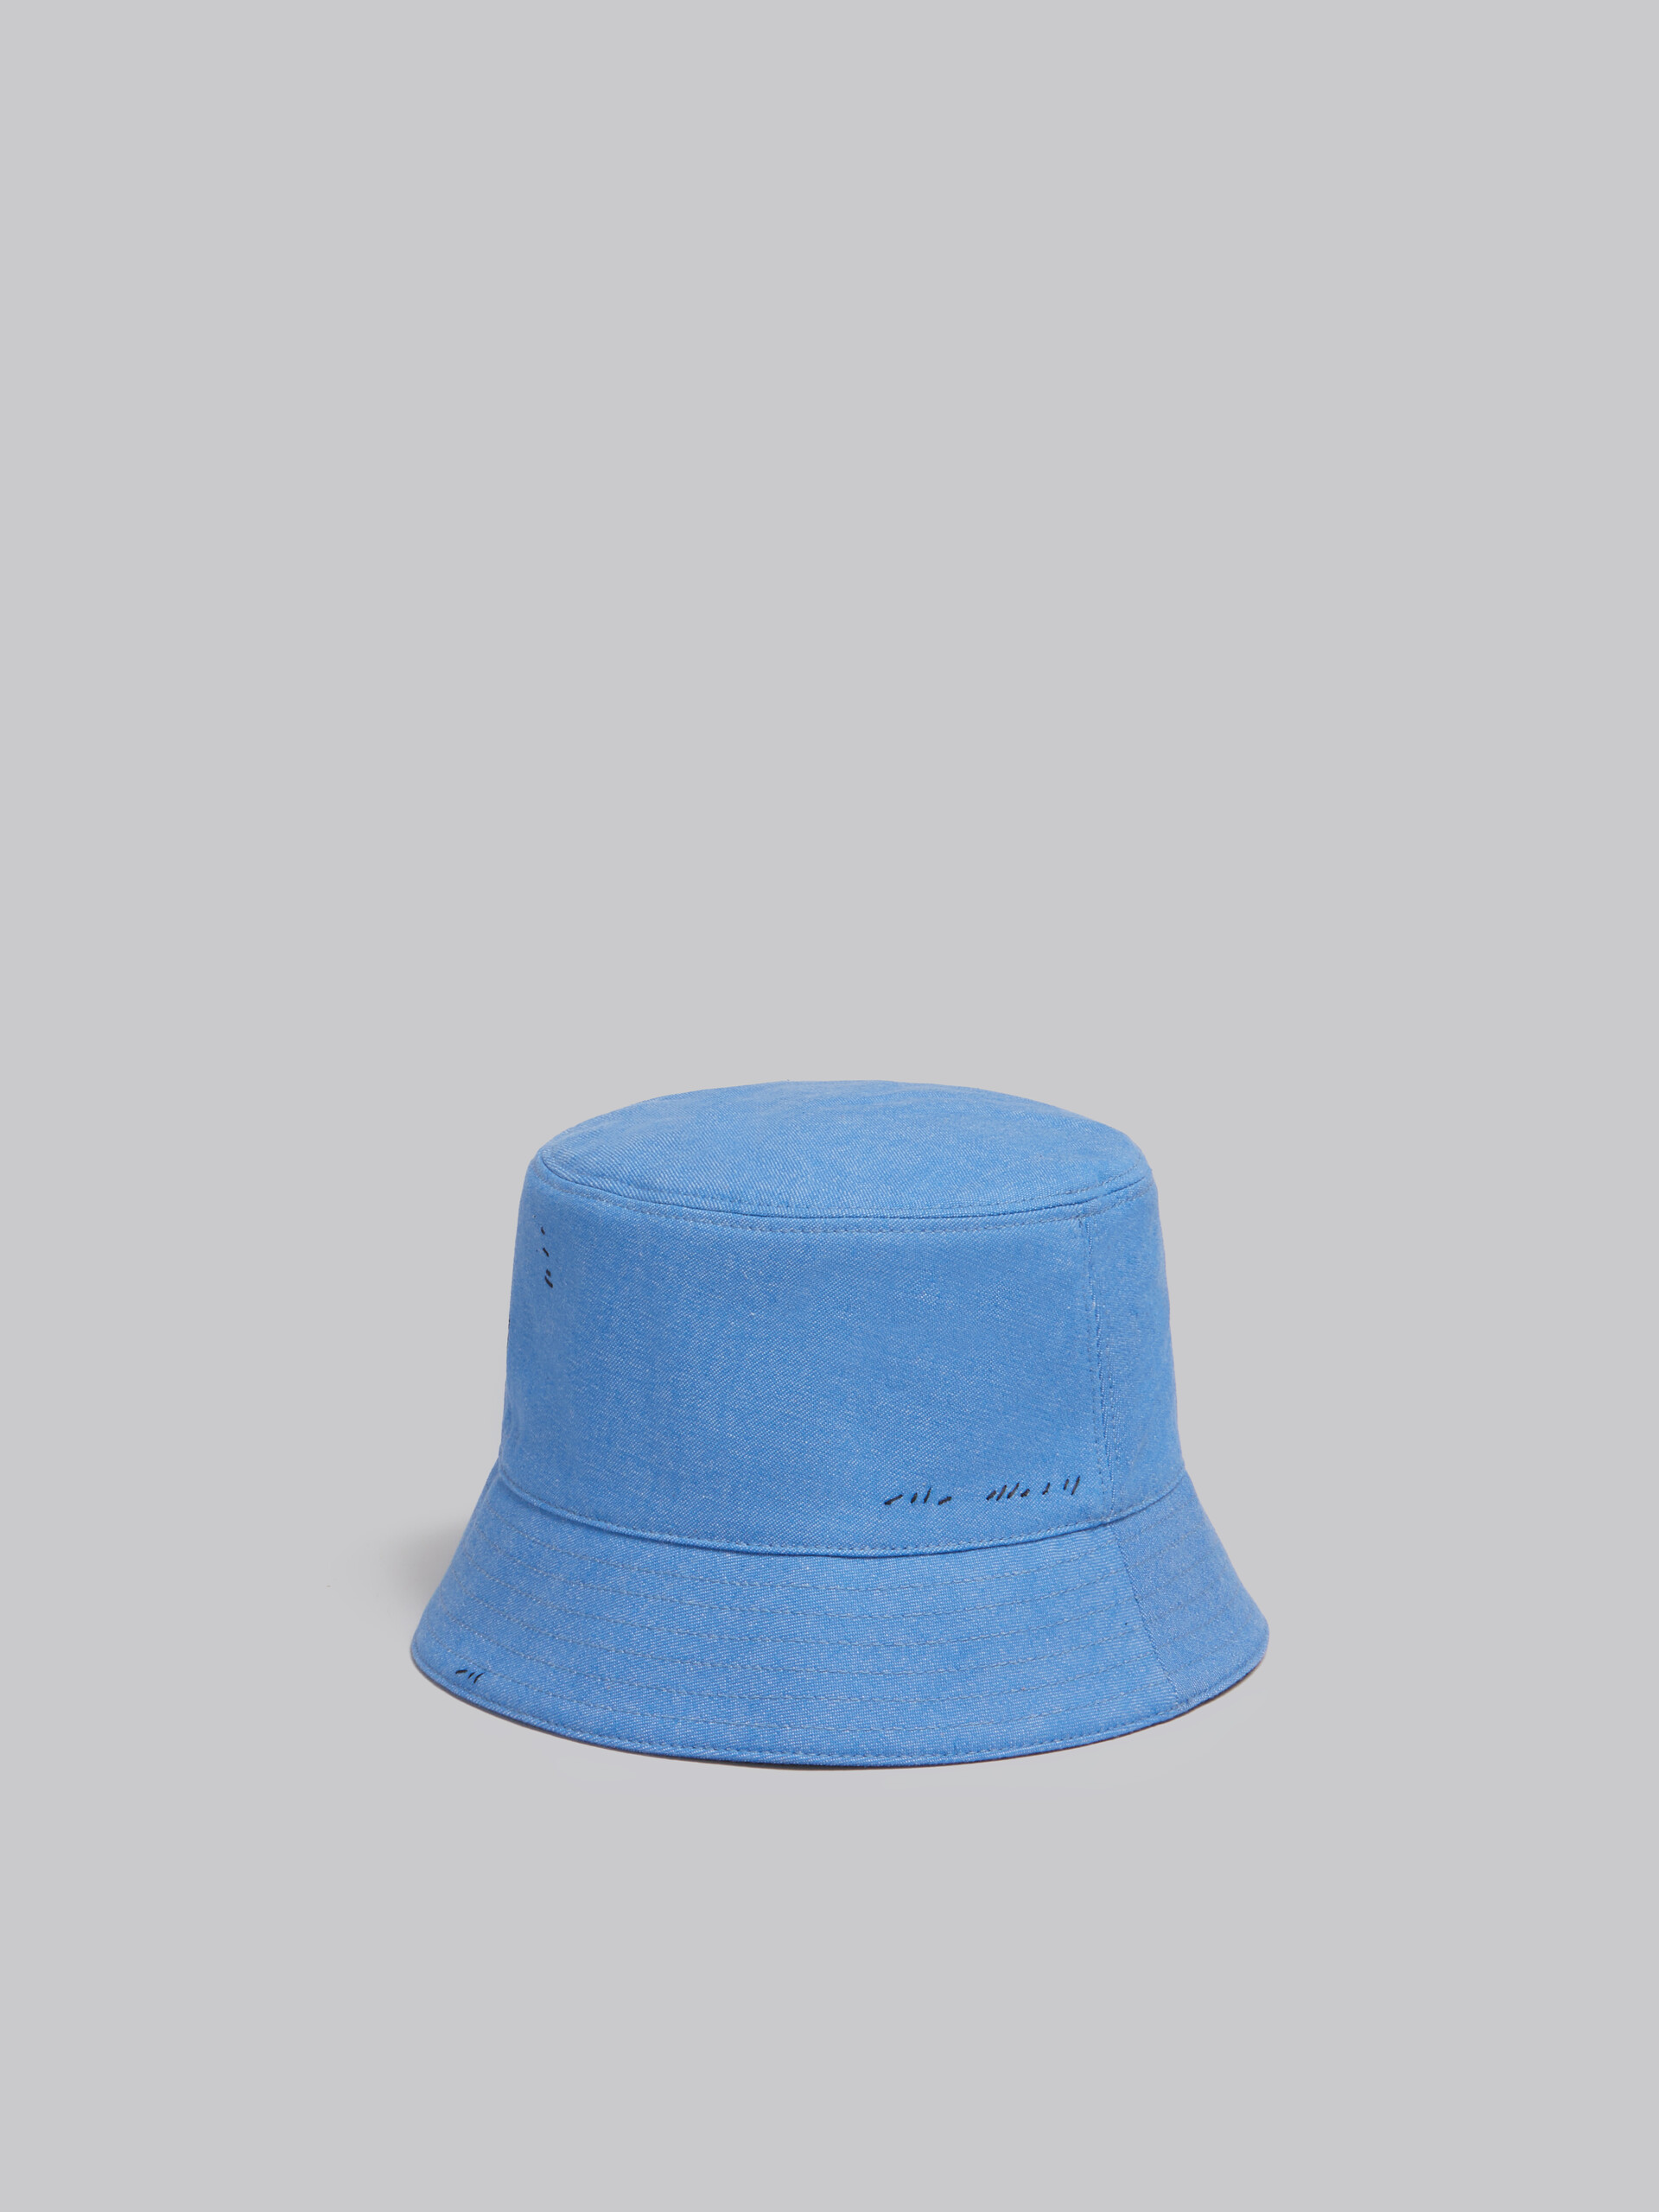 Blue denim bucket hat with Marni mending - Hats - Image 3